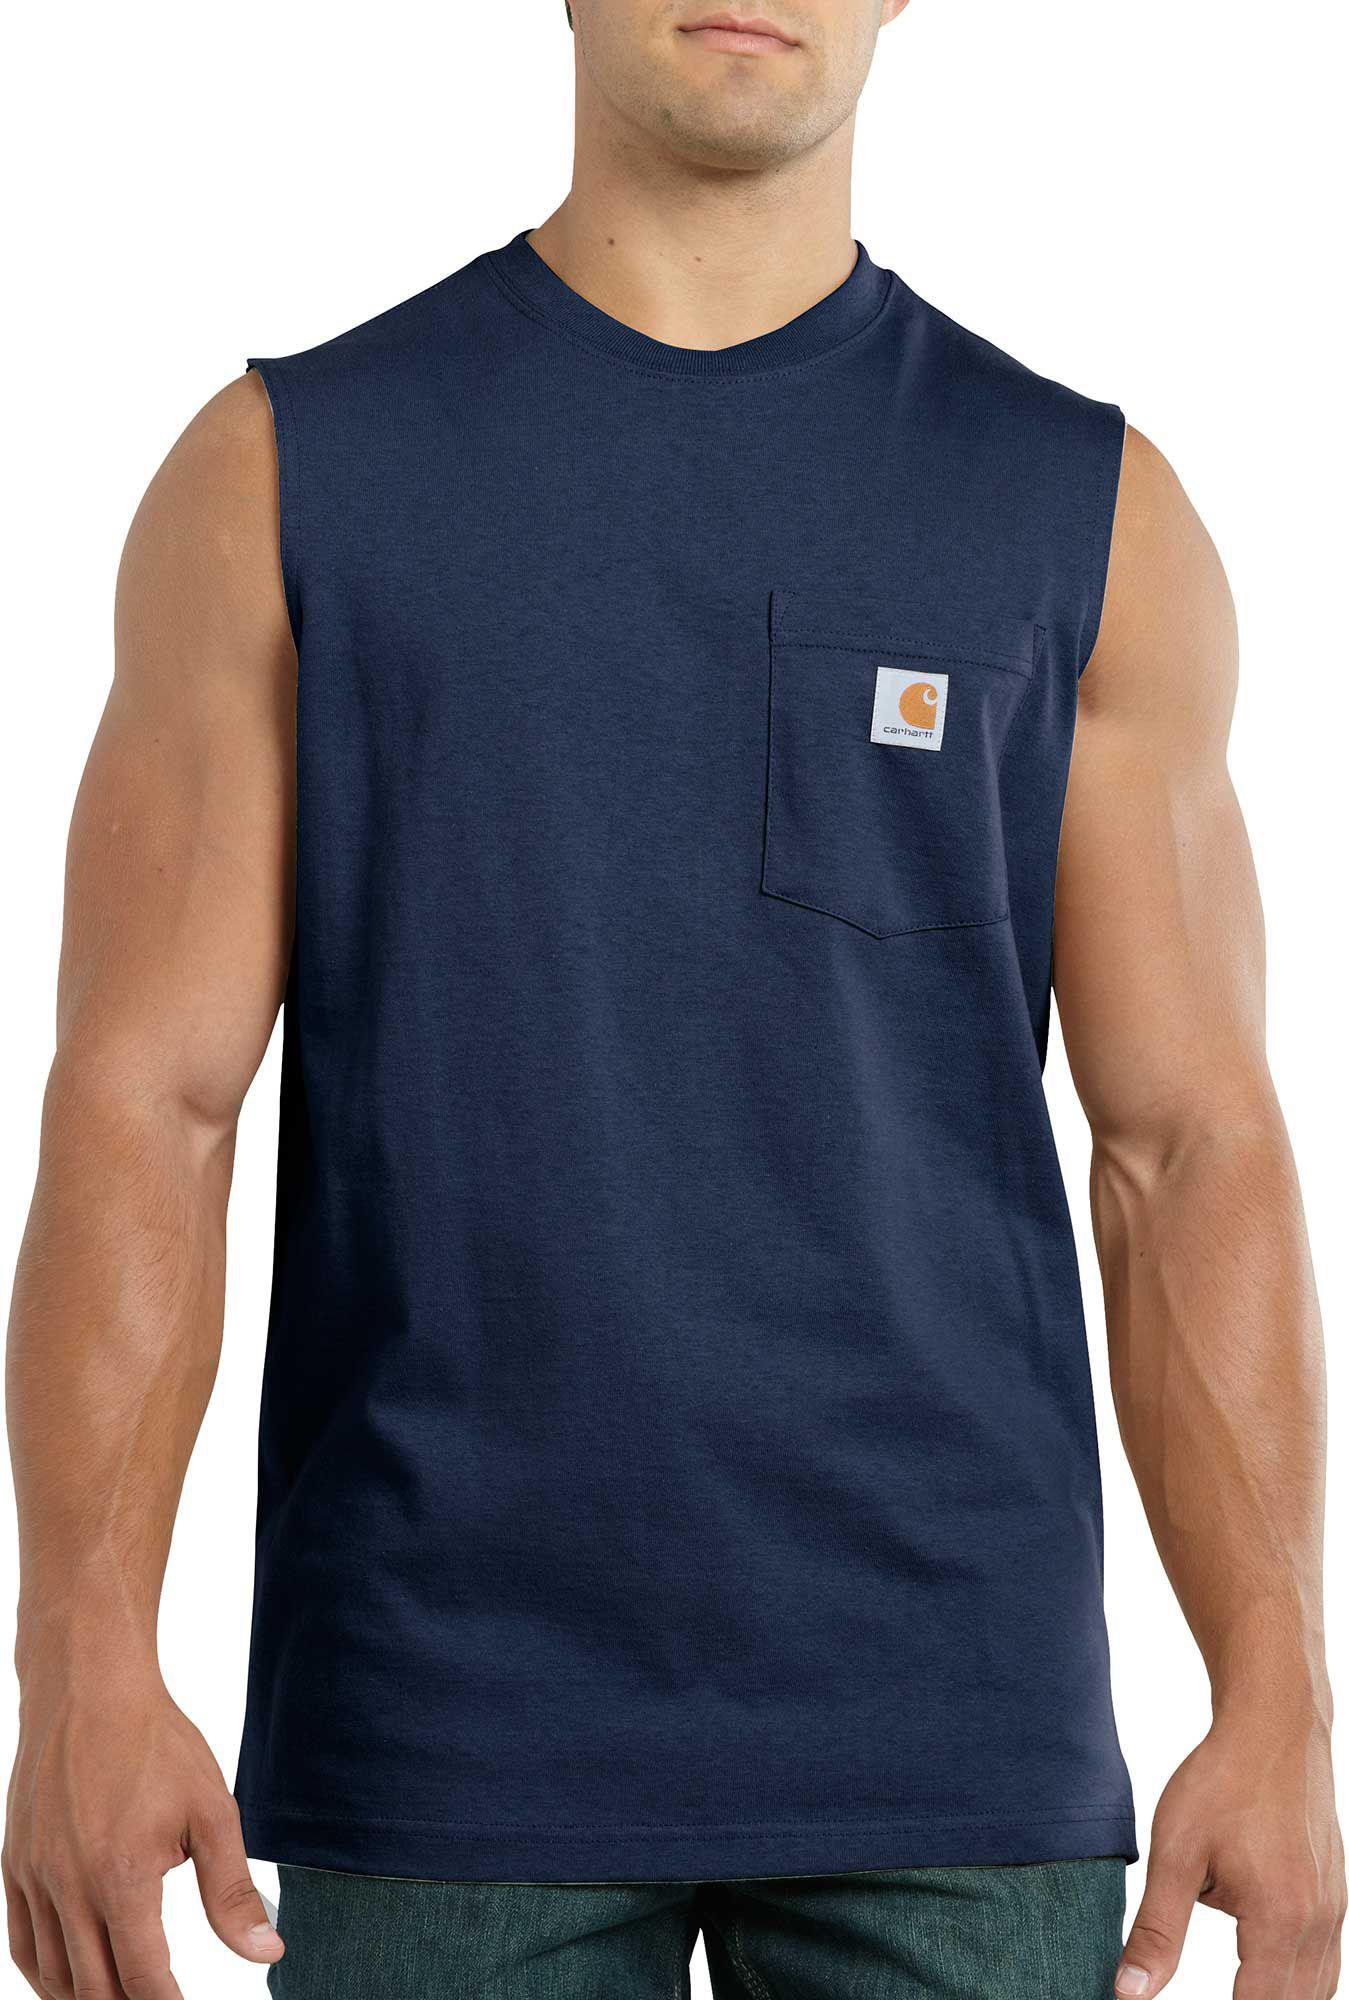 Carhartt Workwear Sleeveless Pocket Shirt in Blue for Men - Lyst